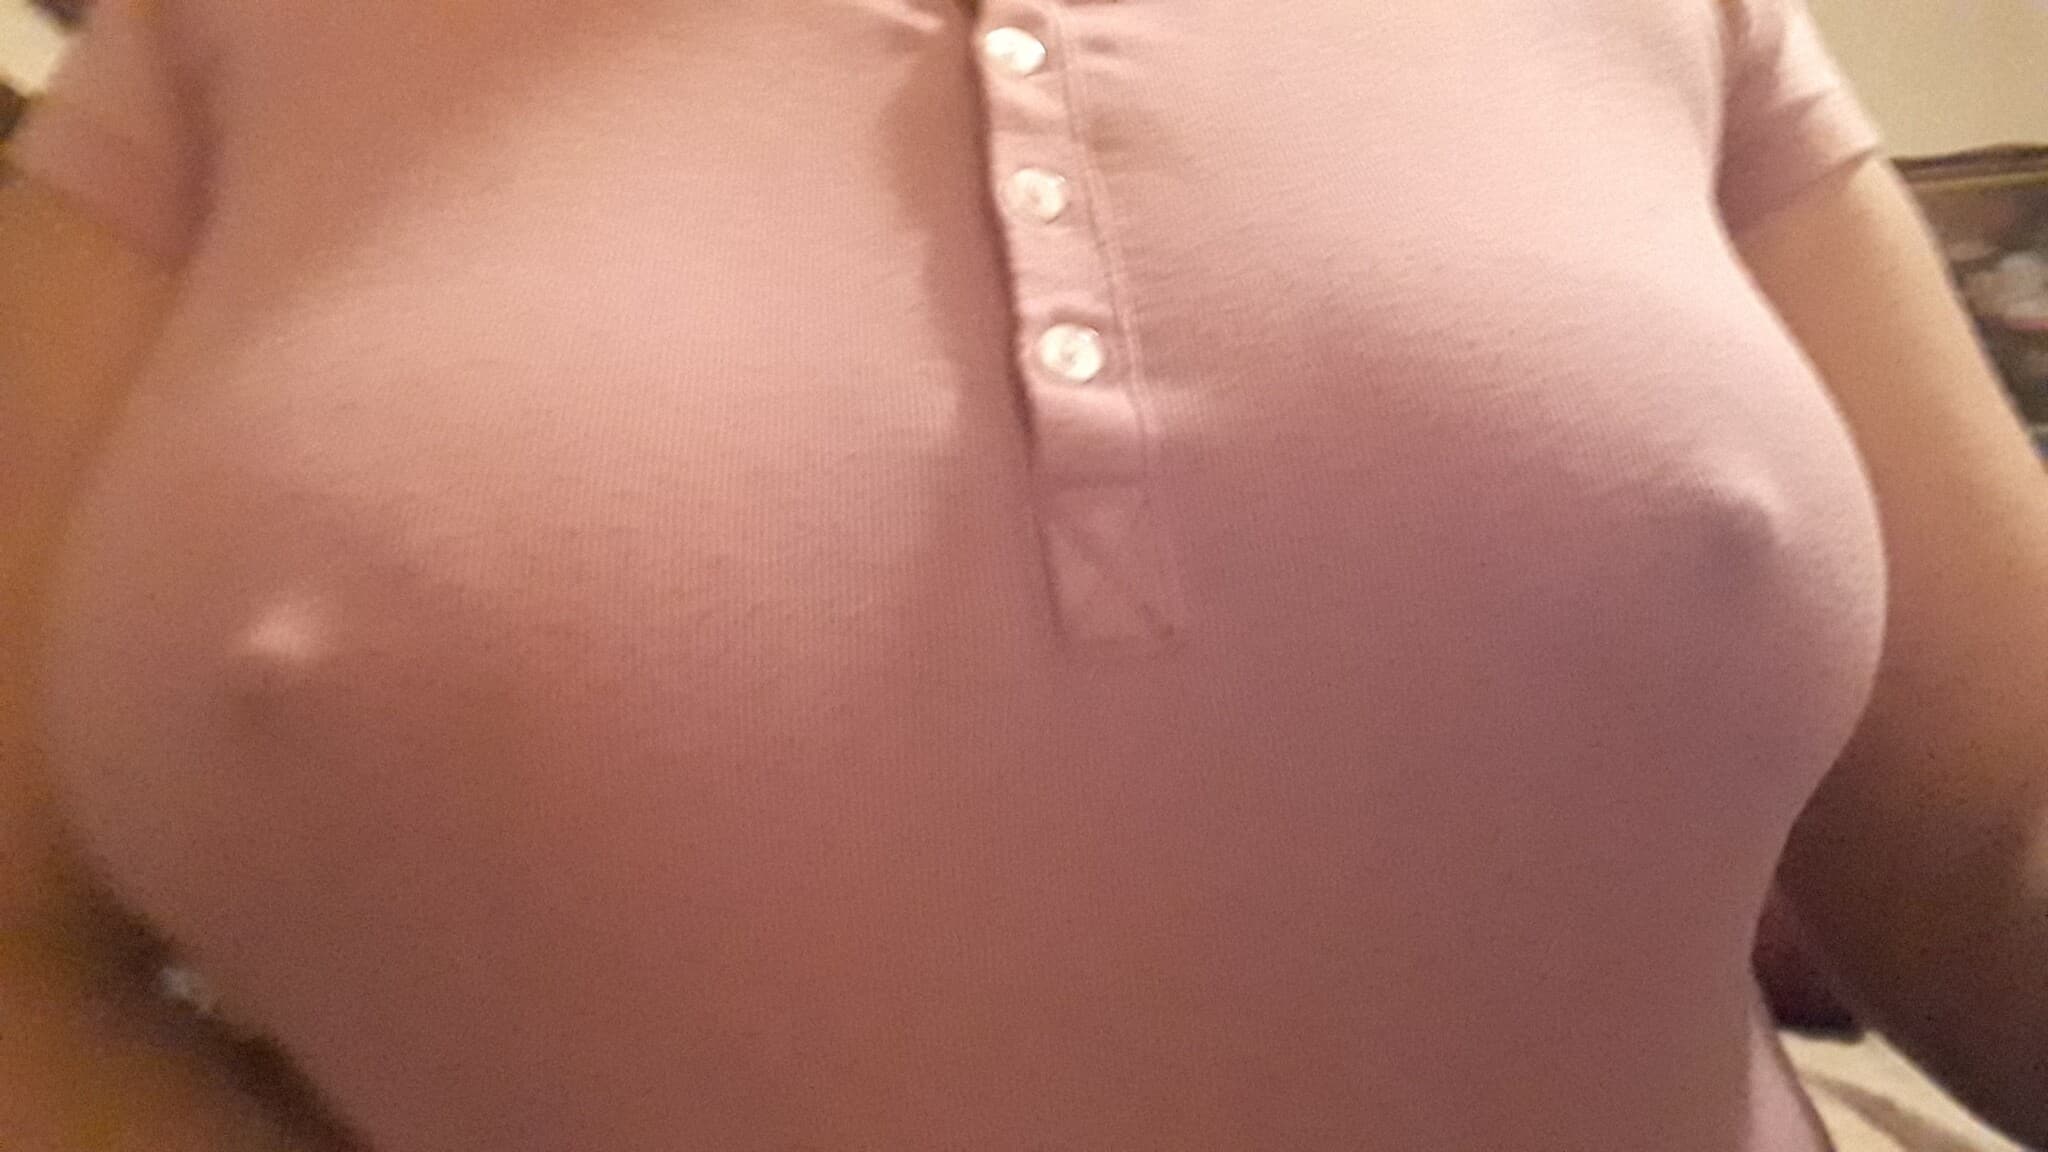 Tits In Tight Shirts Tumblr